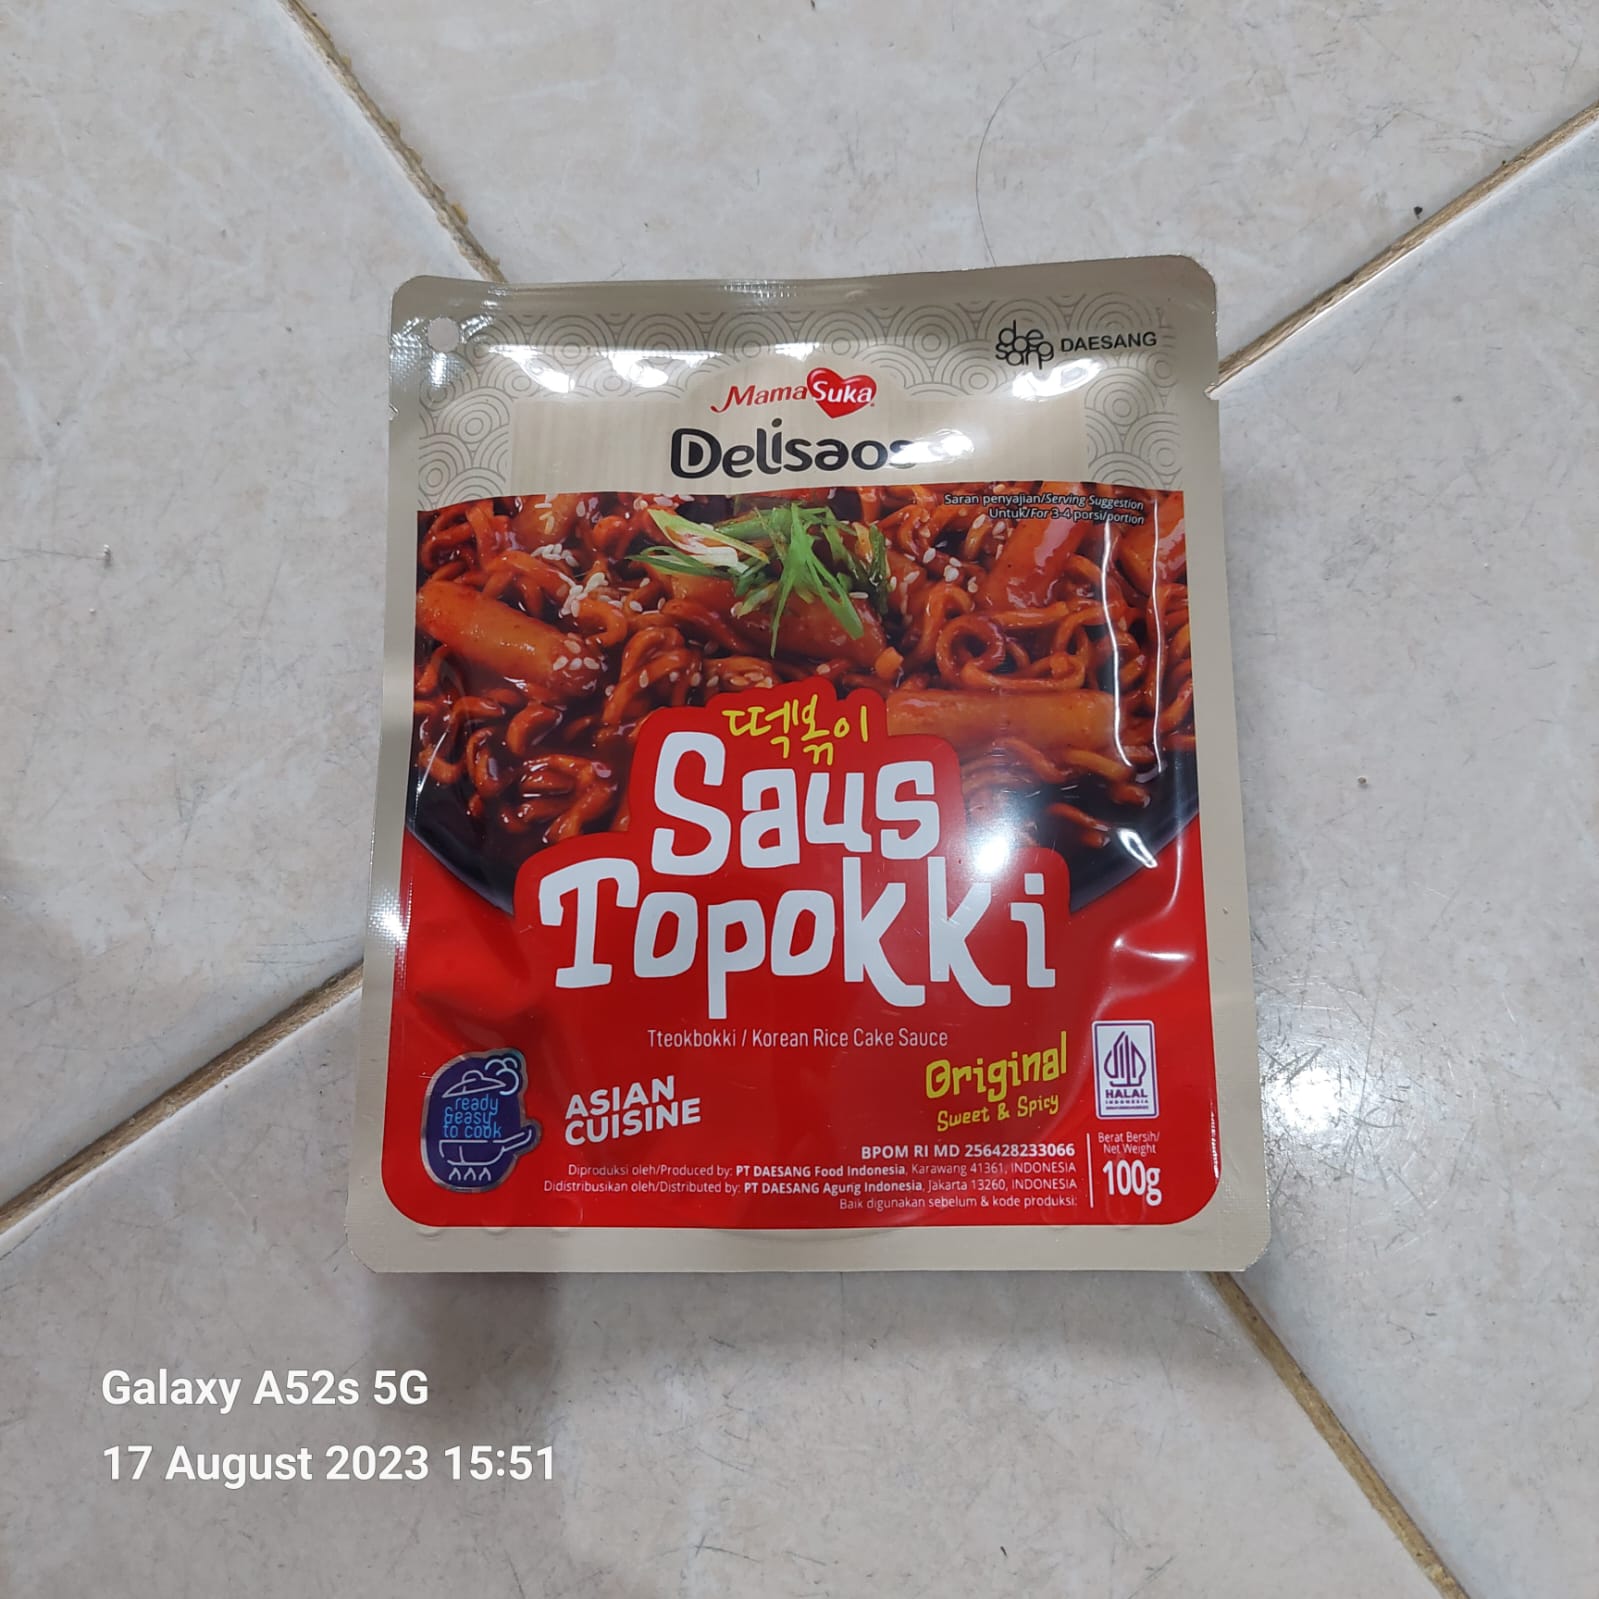 Indonesia Mamasuka Topokki - Original